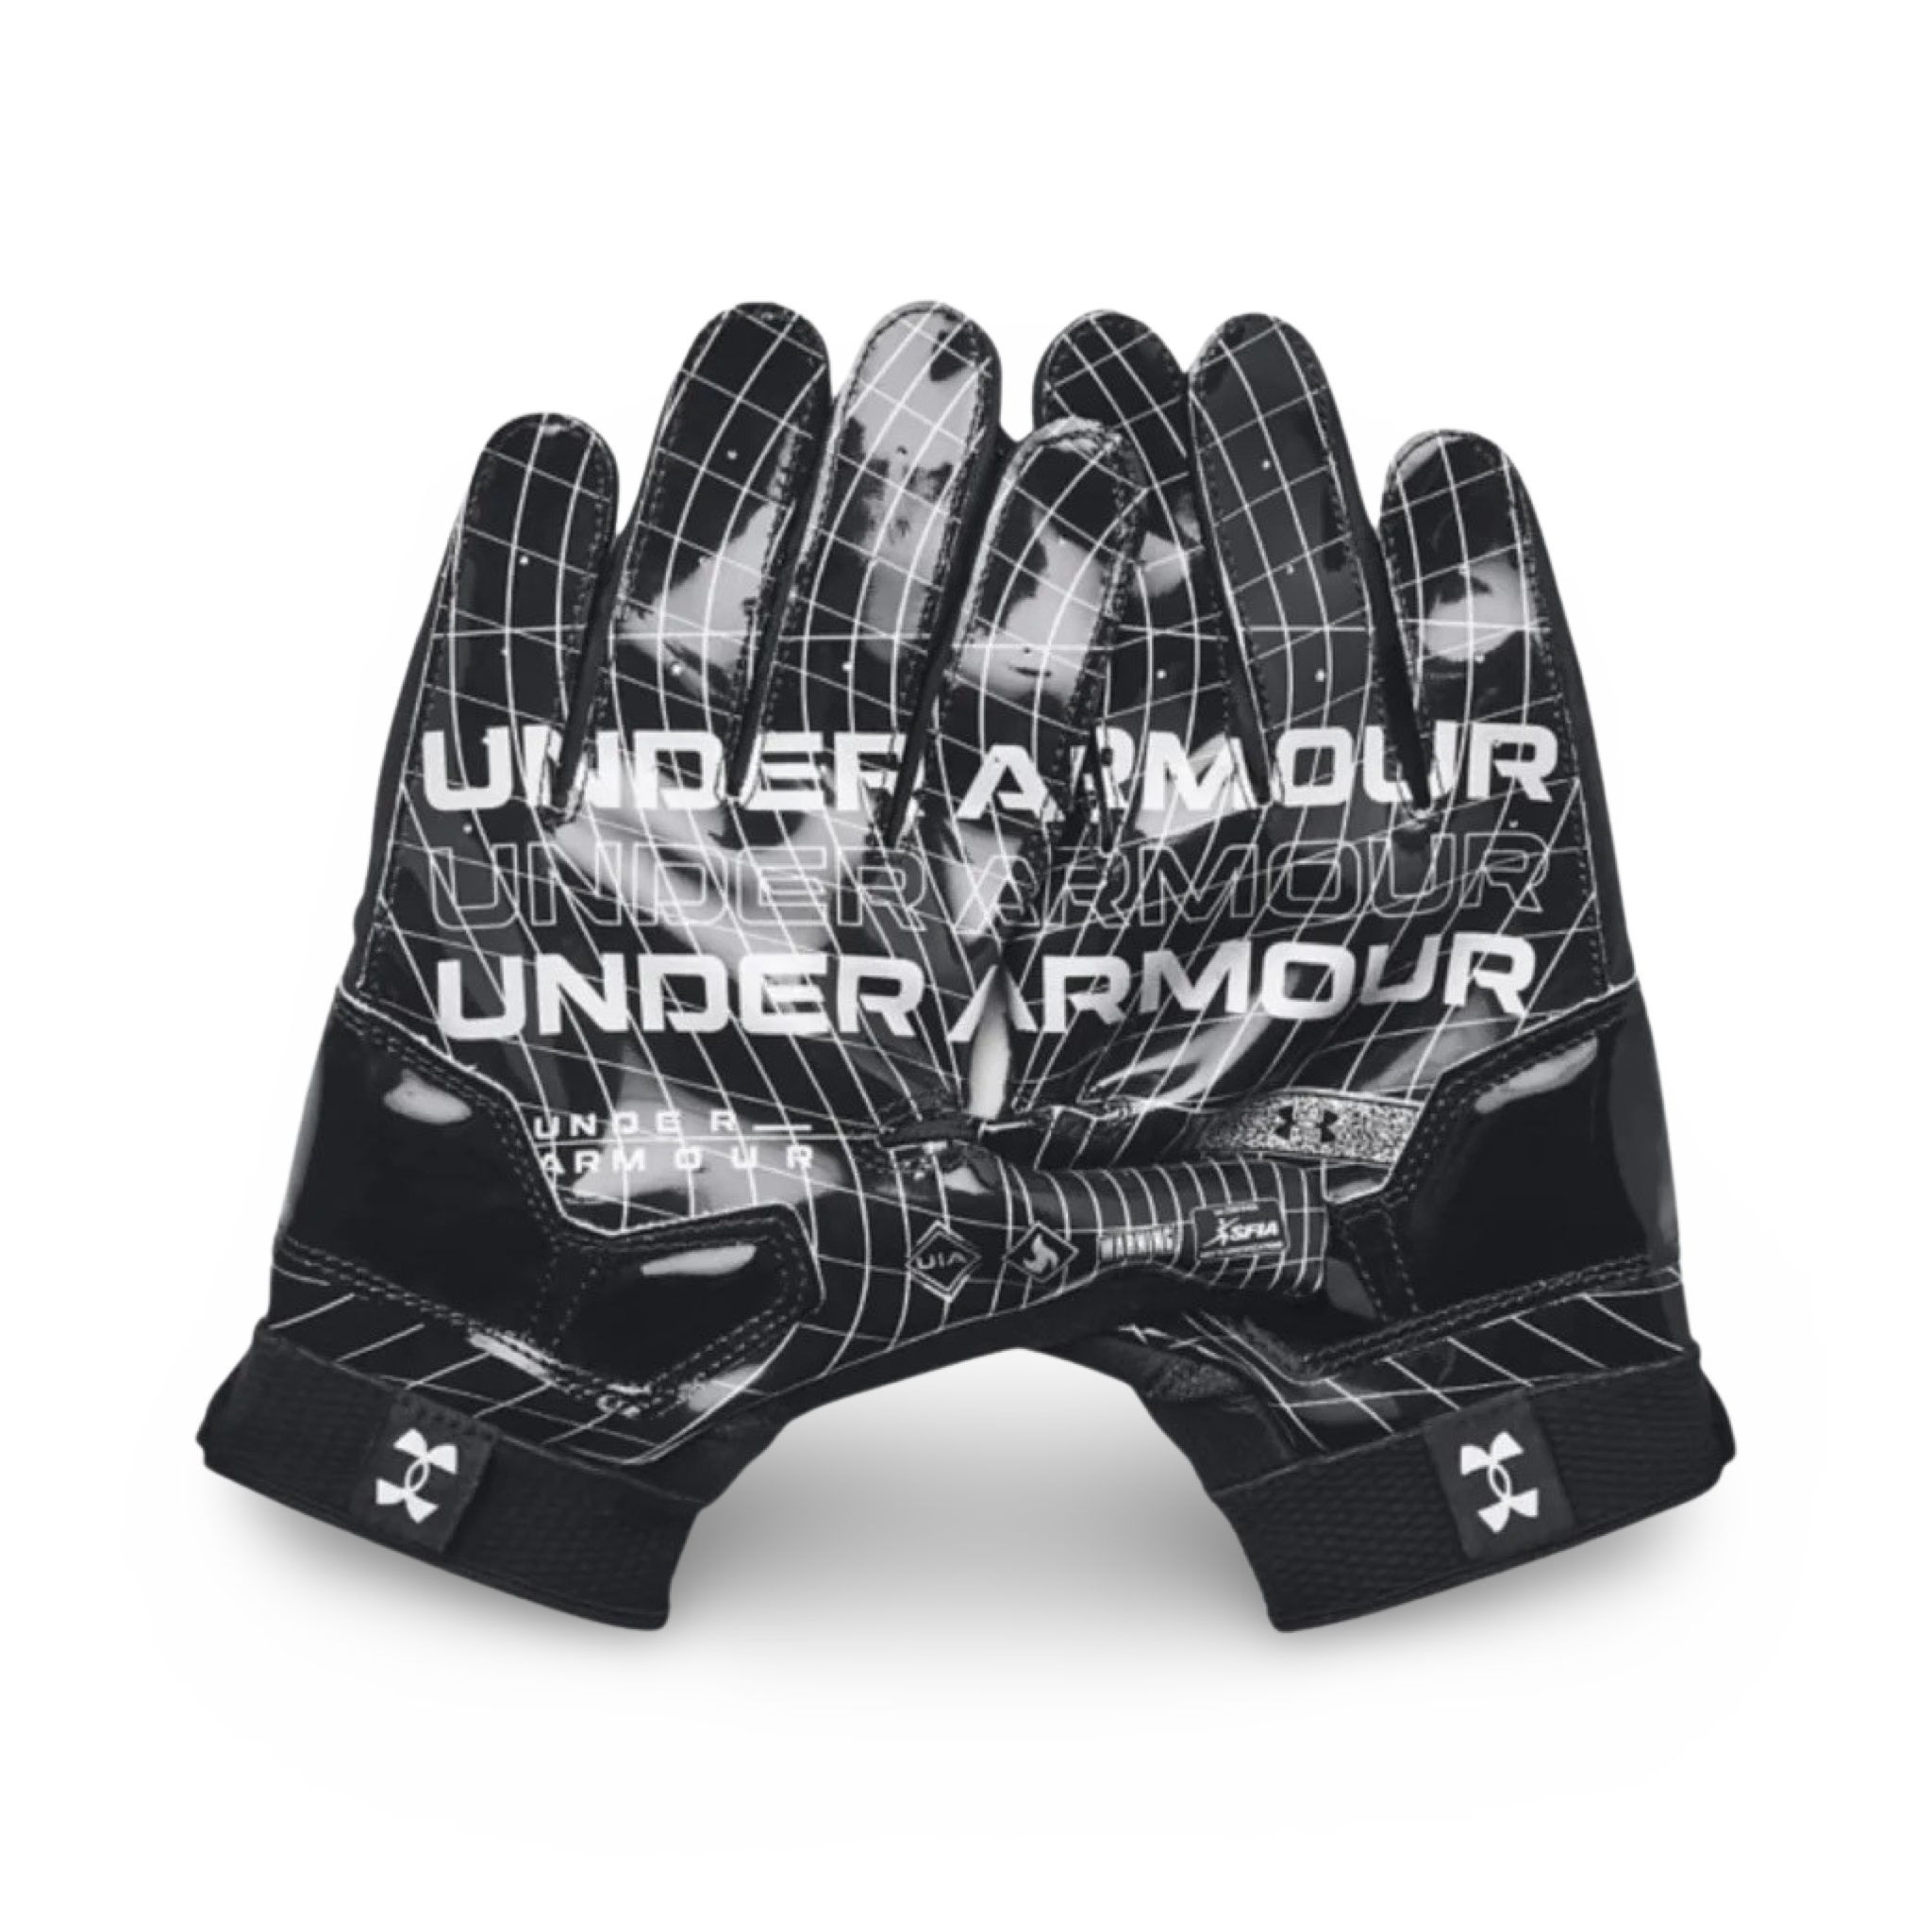 Under Armour Men’s Combat Lineman Football Gloves